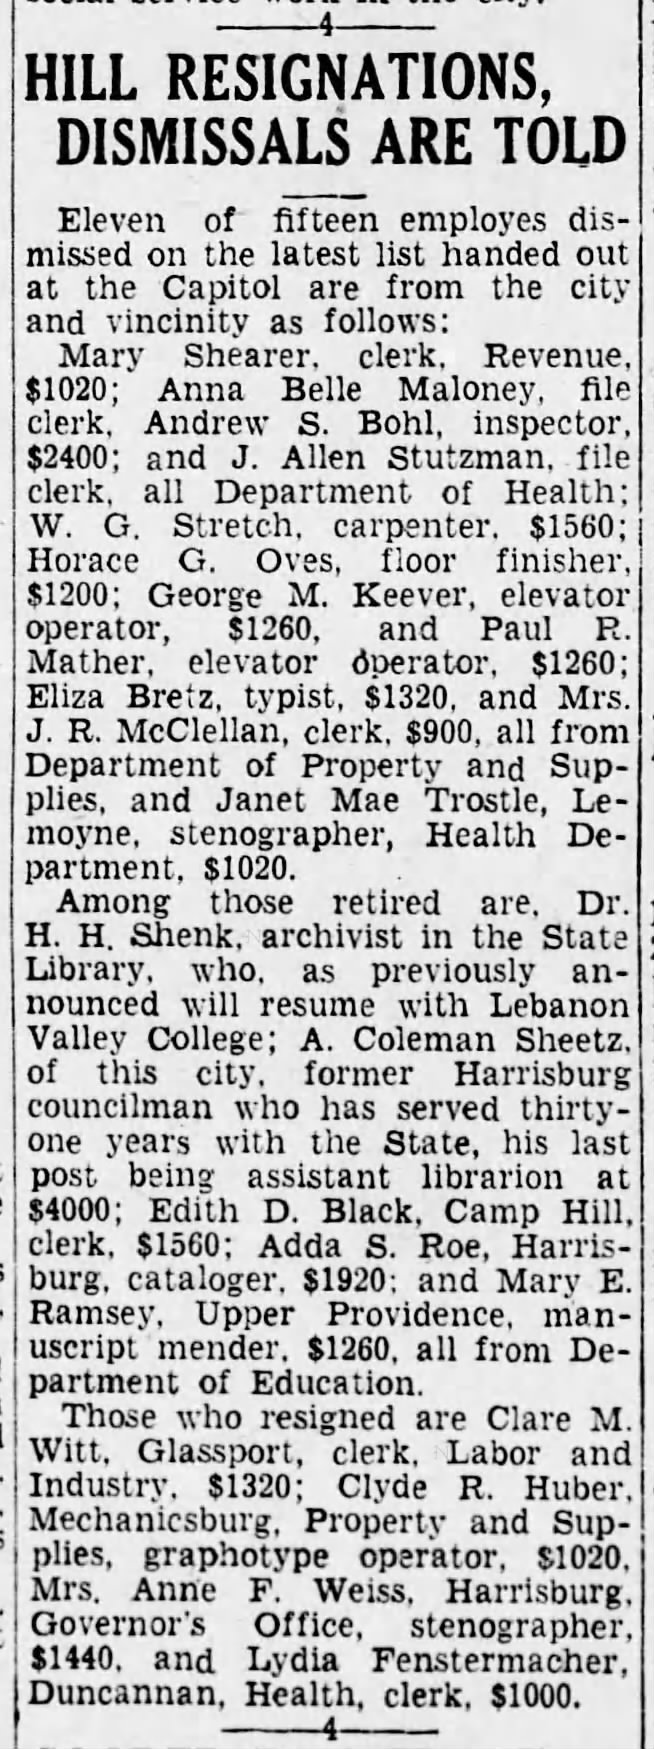 1933 Eliza Bretz typist dismissed from Capitol pd $1320